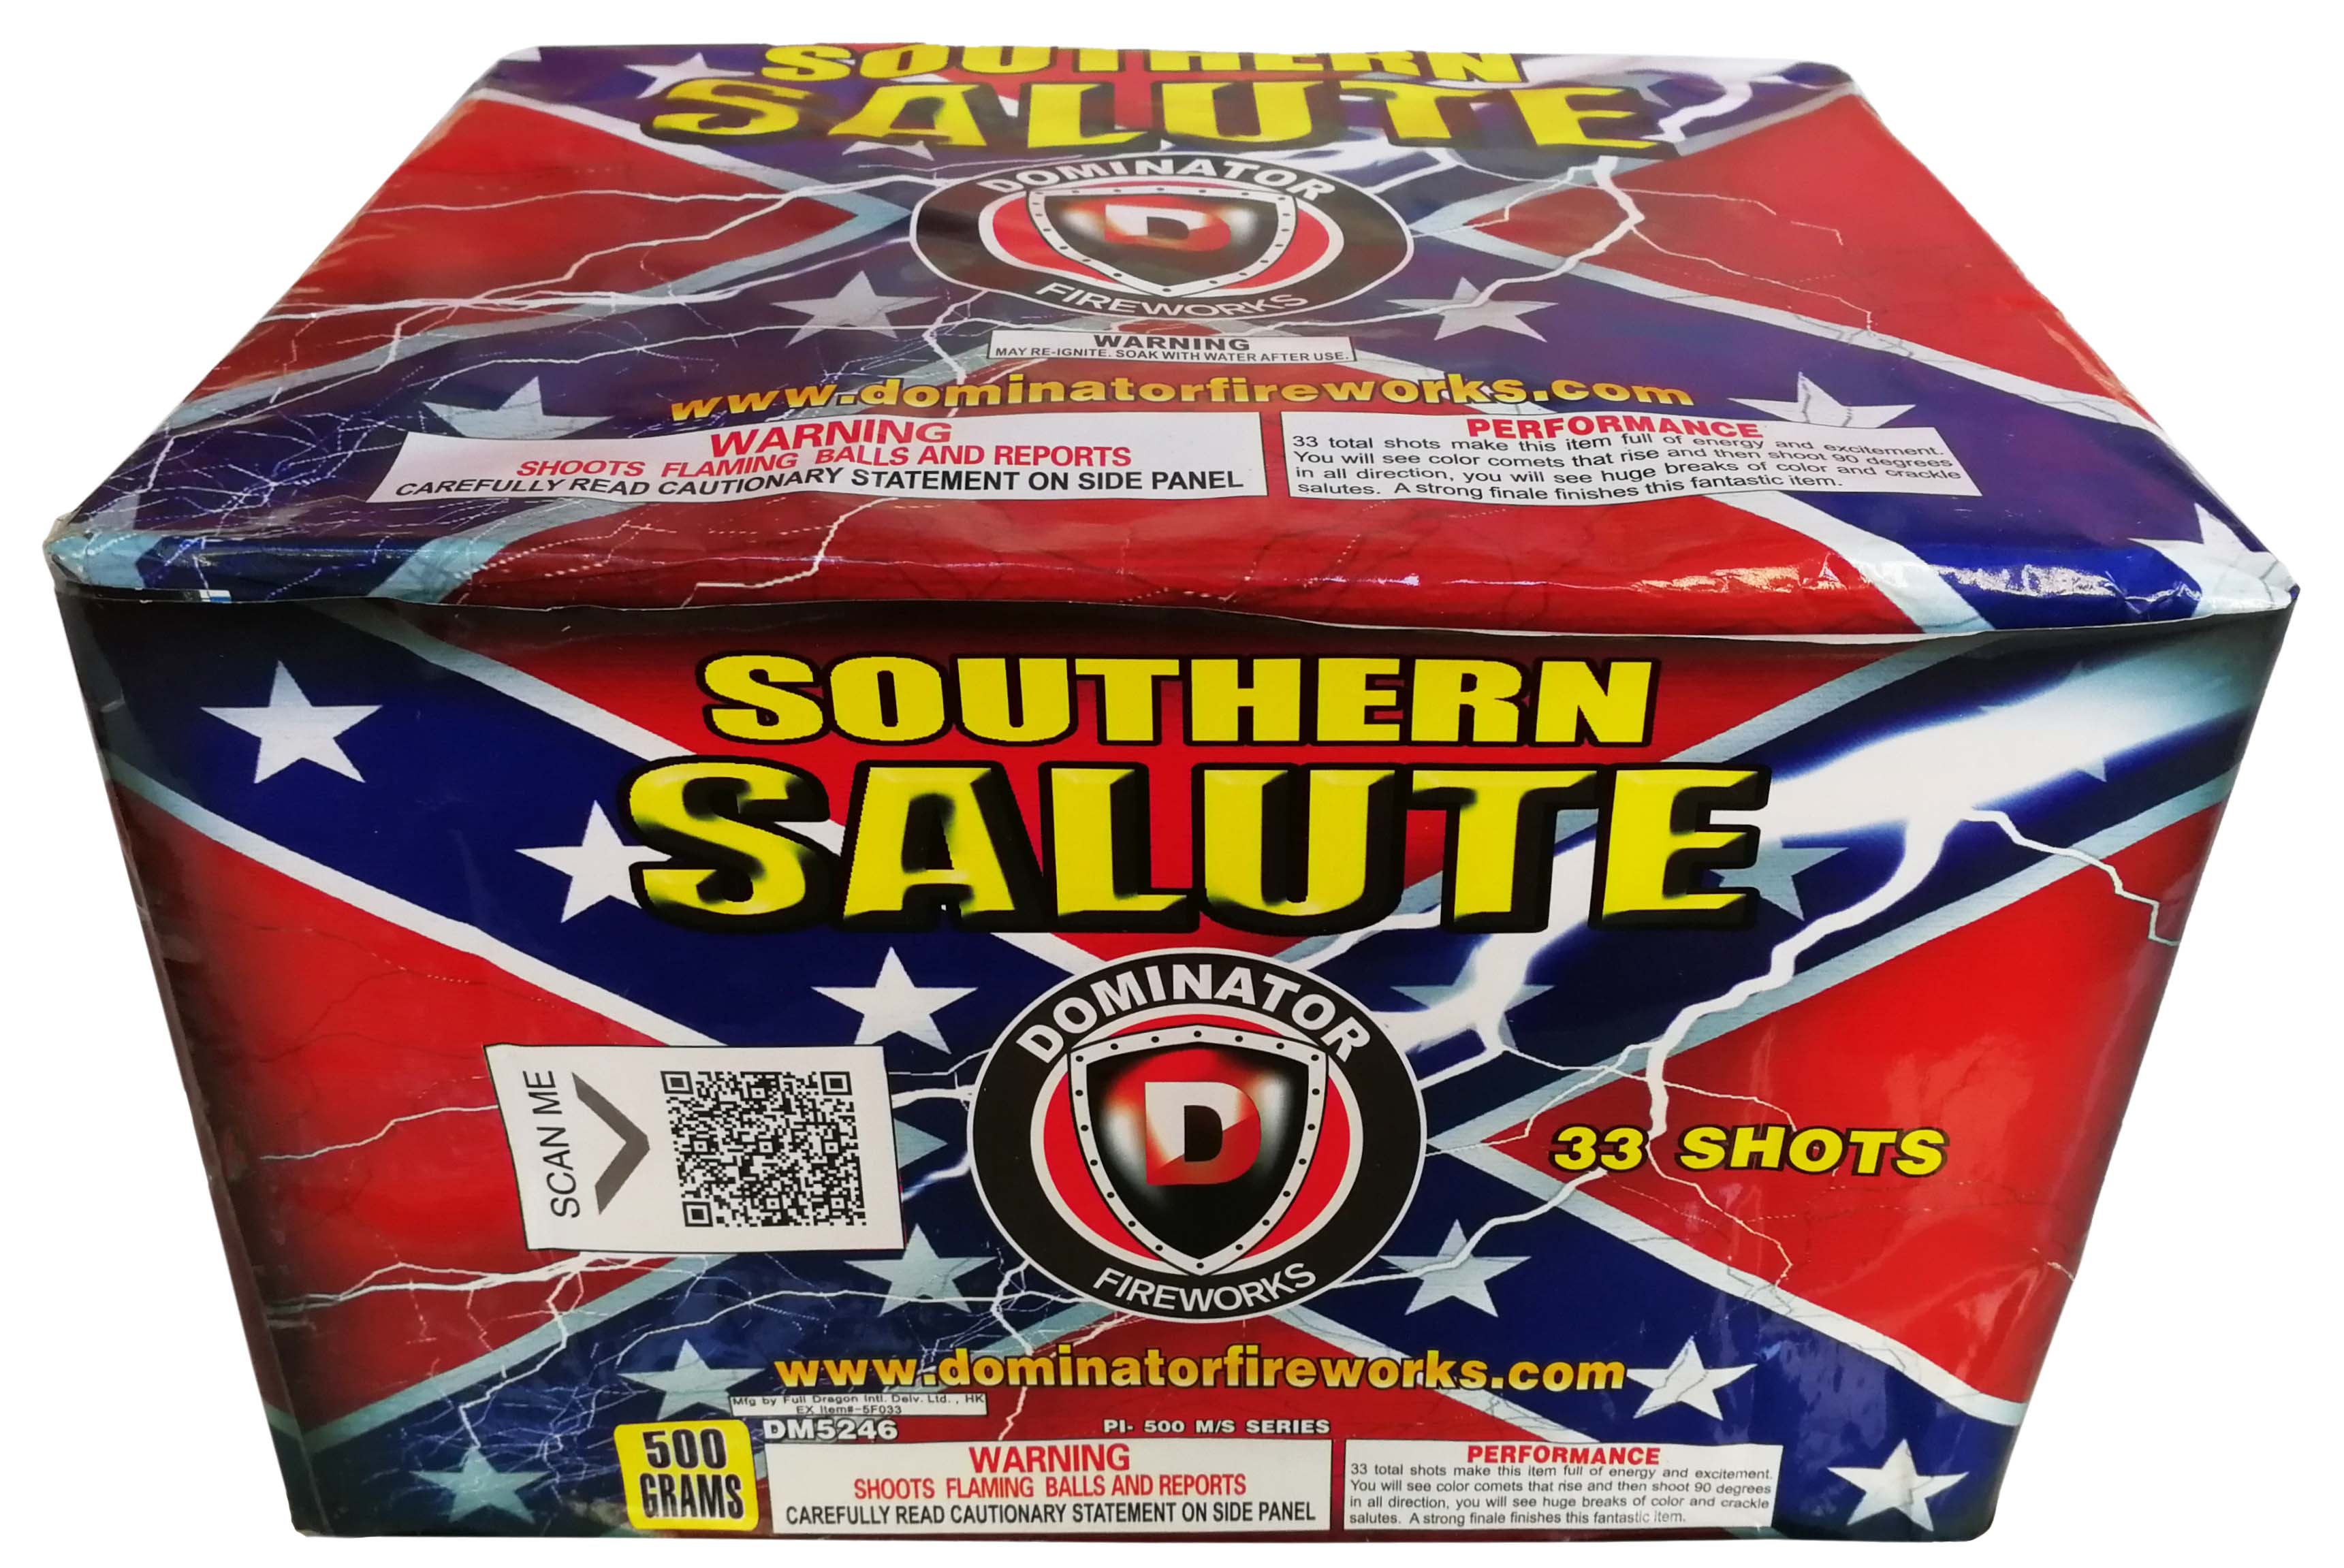 Southern Salute